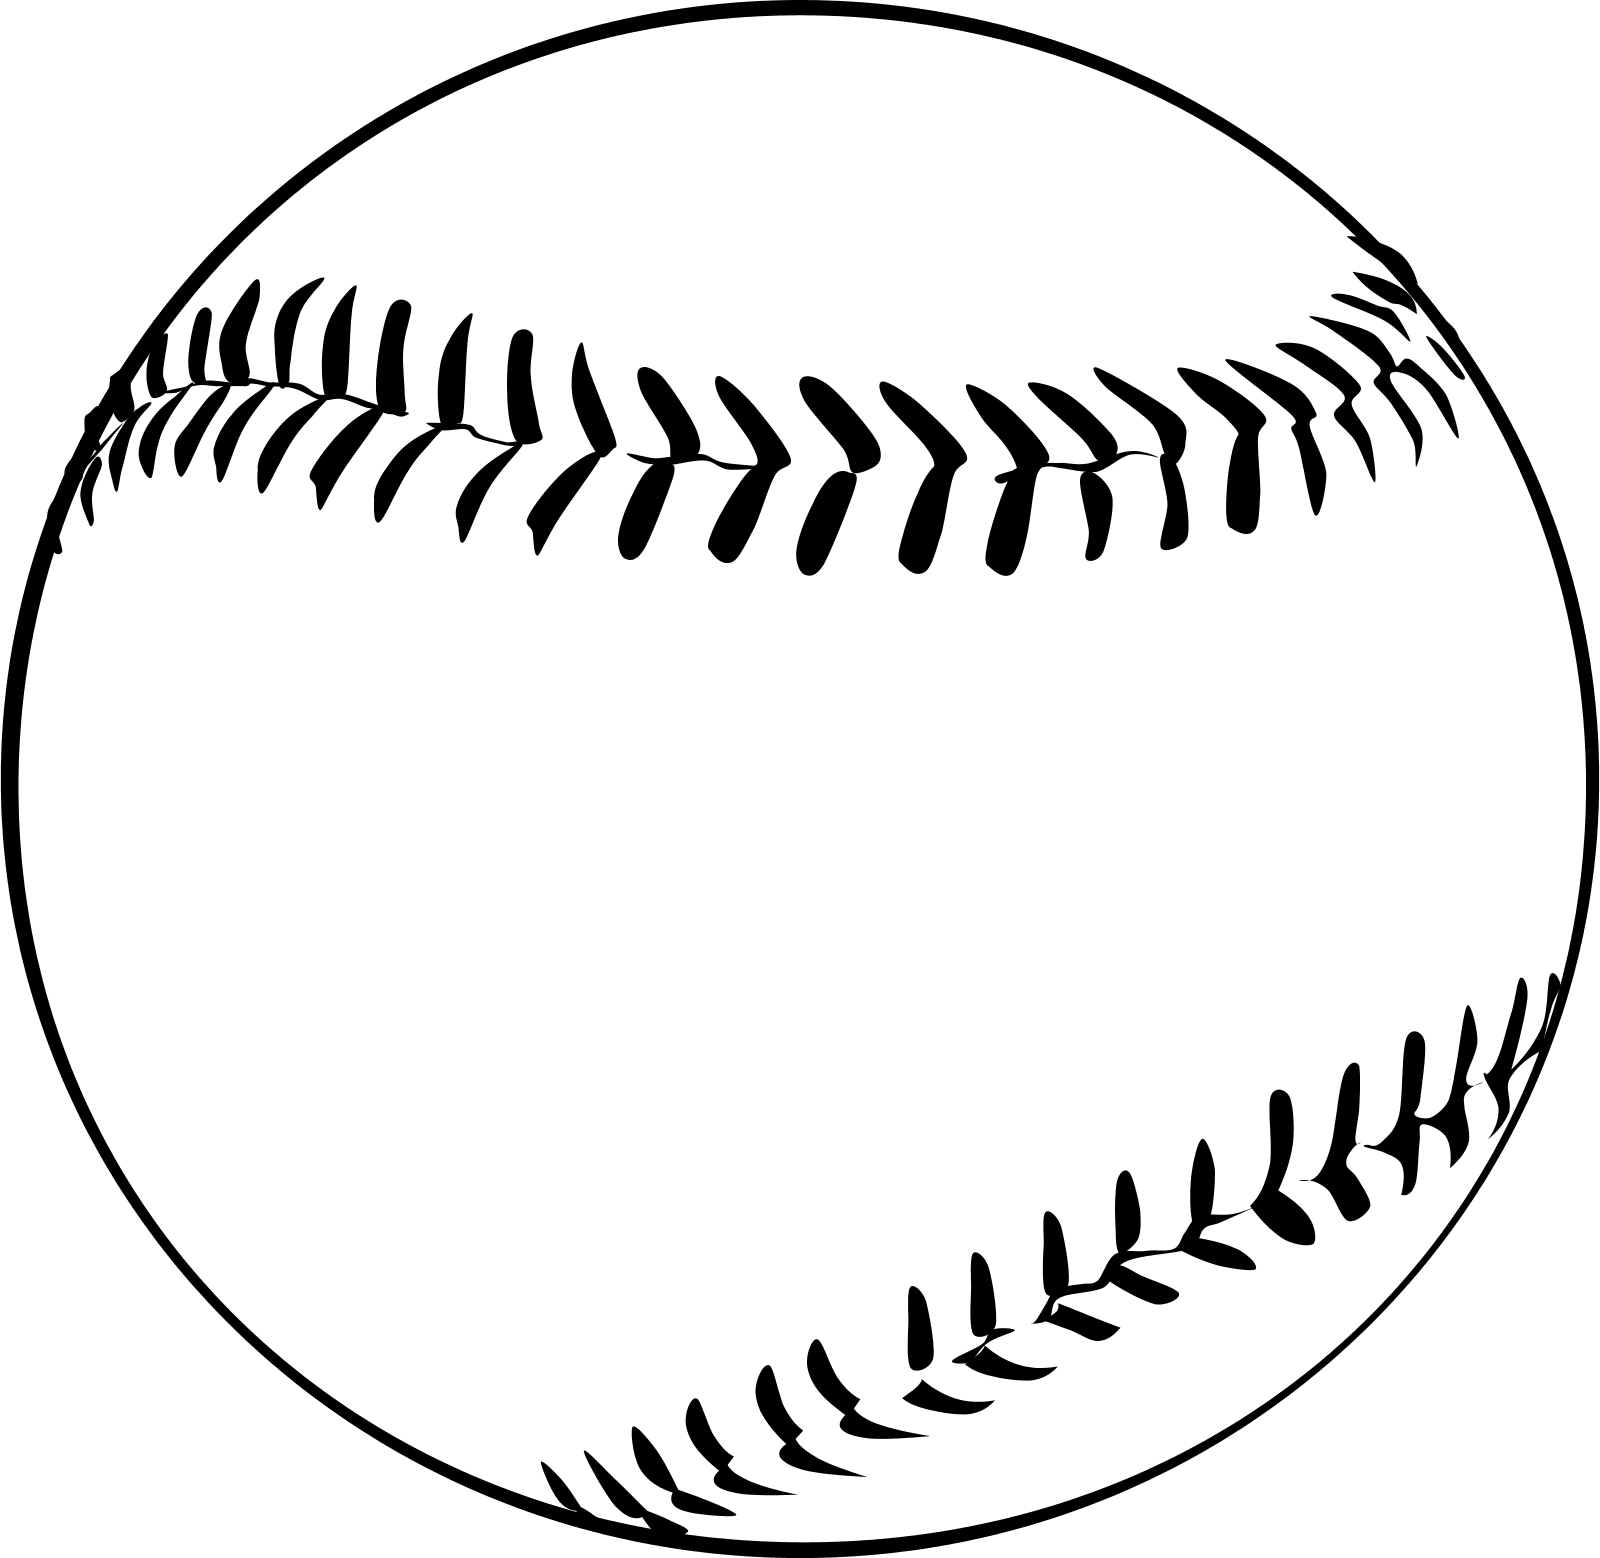 Black and white baseball field clipart